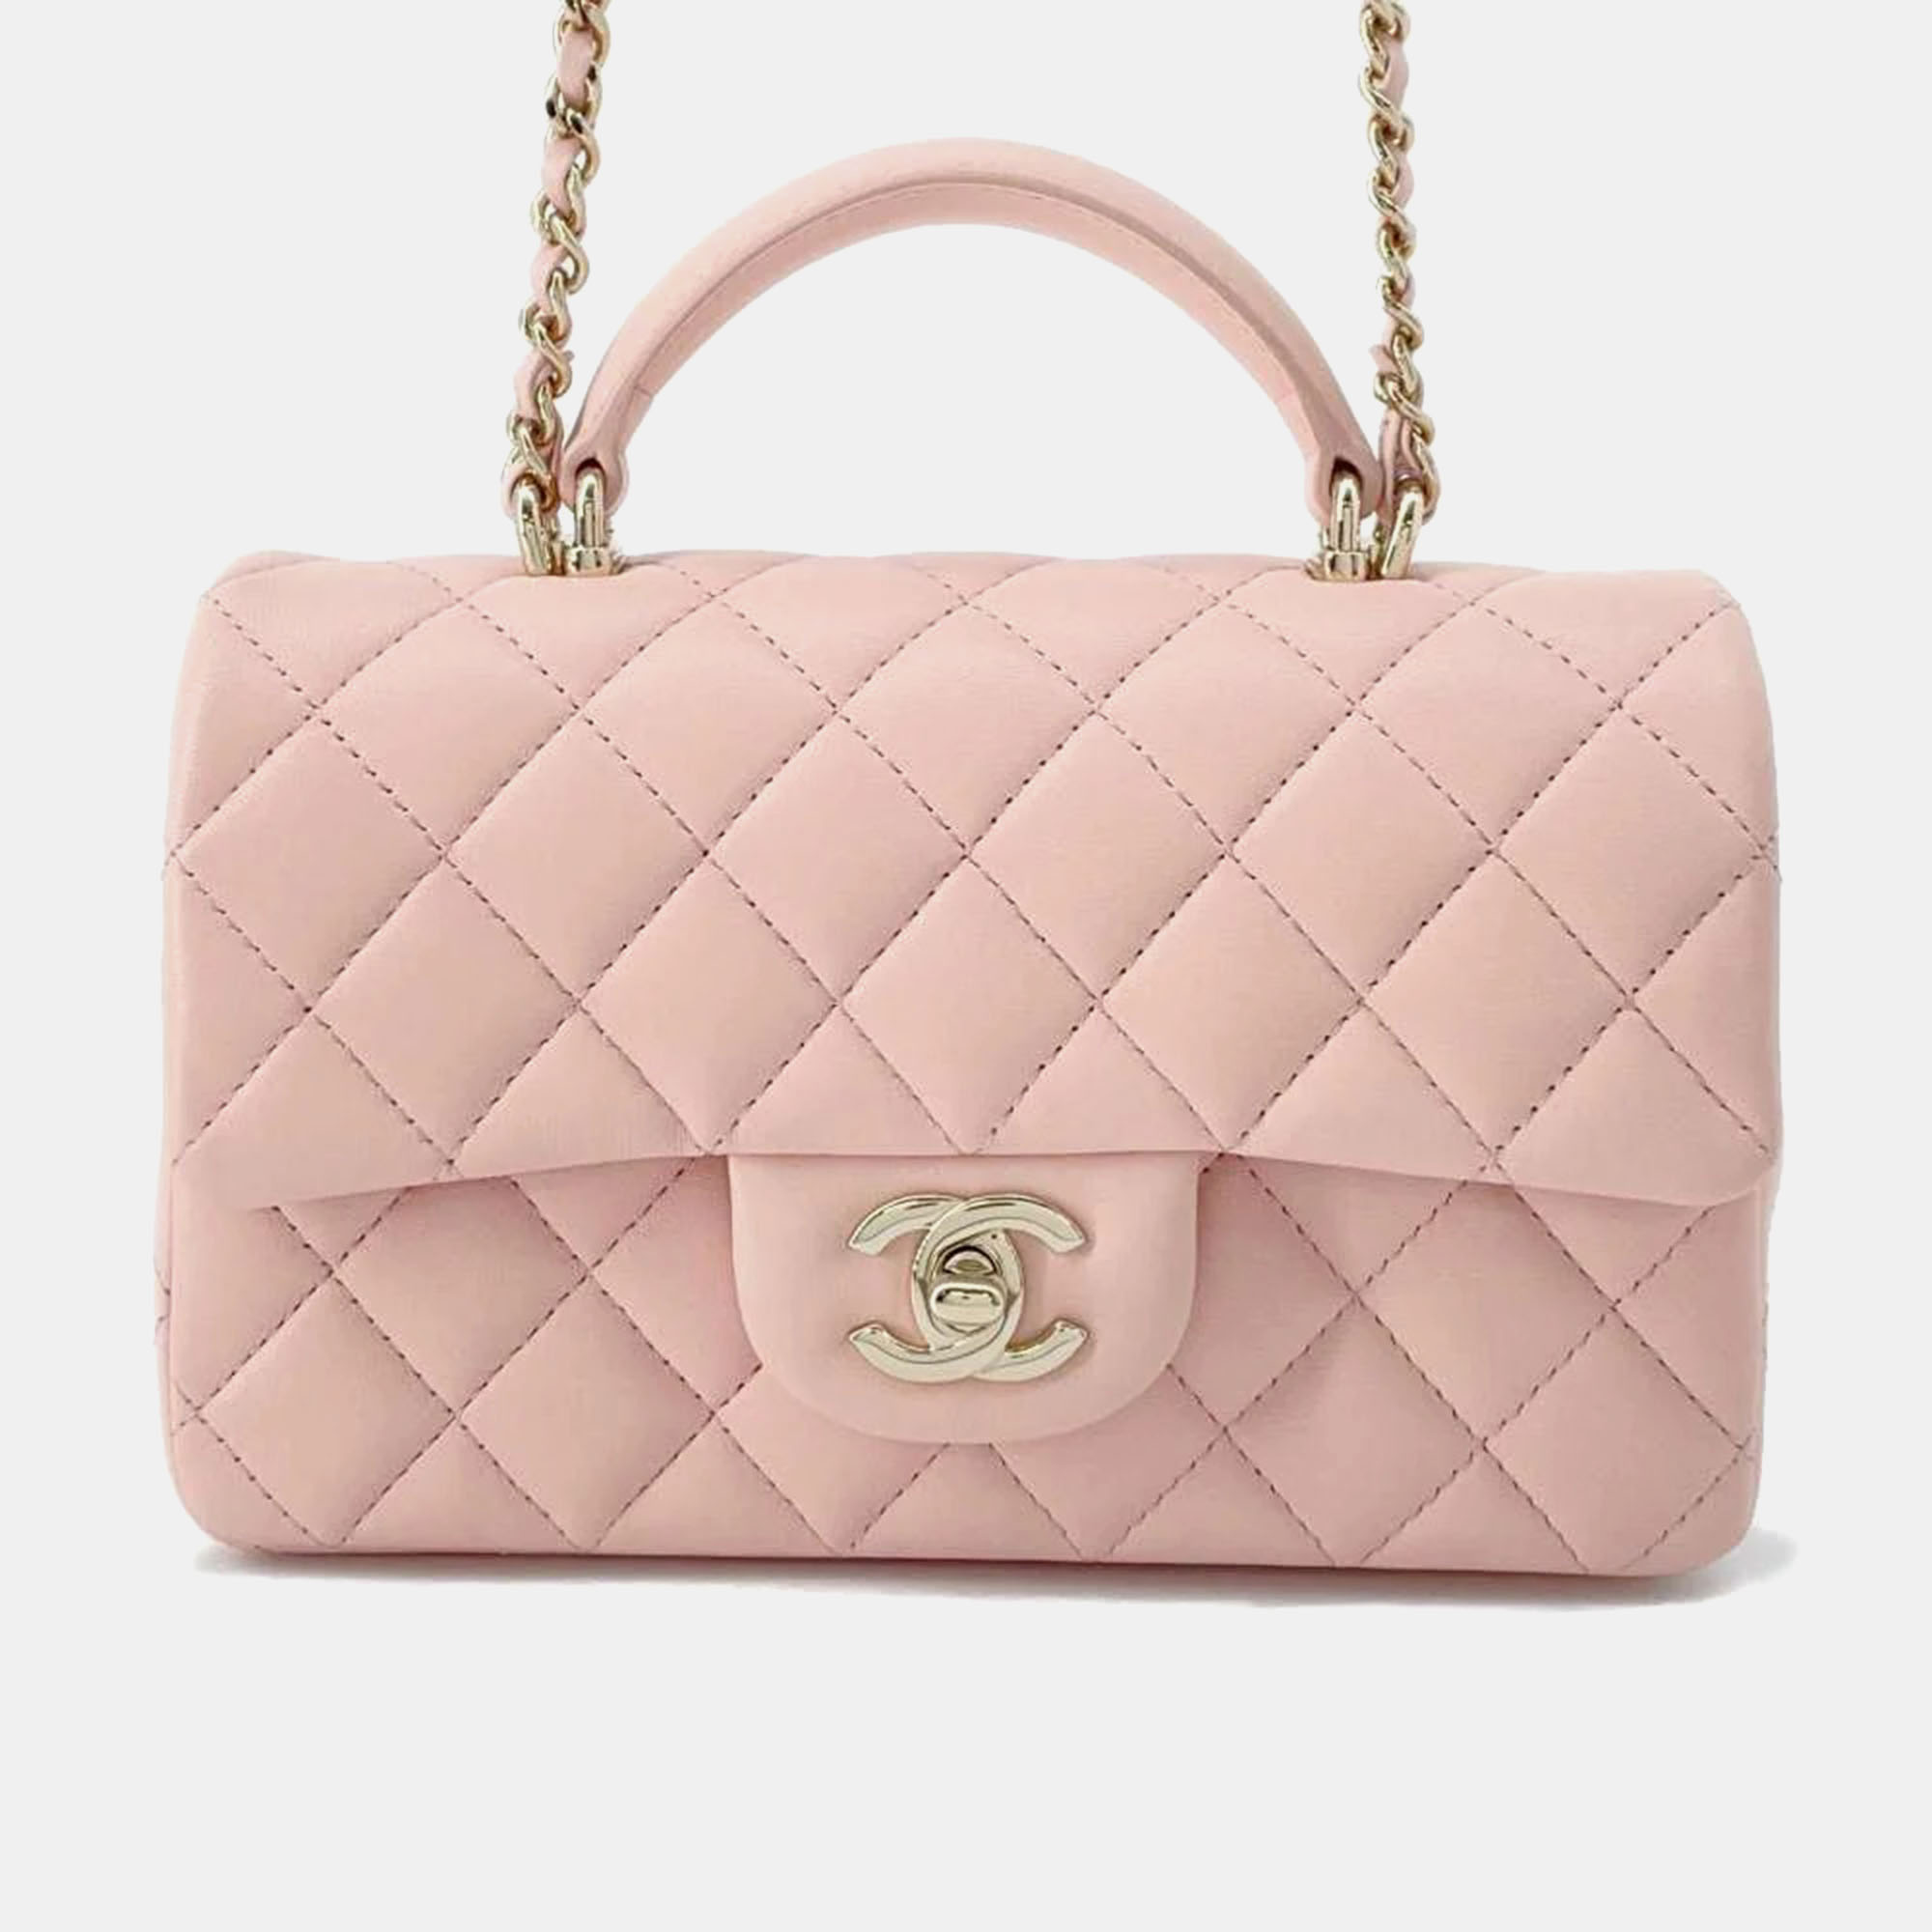 Chanel pink lambskin top handle mini flap bag